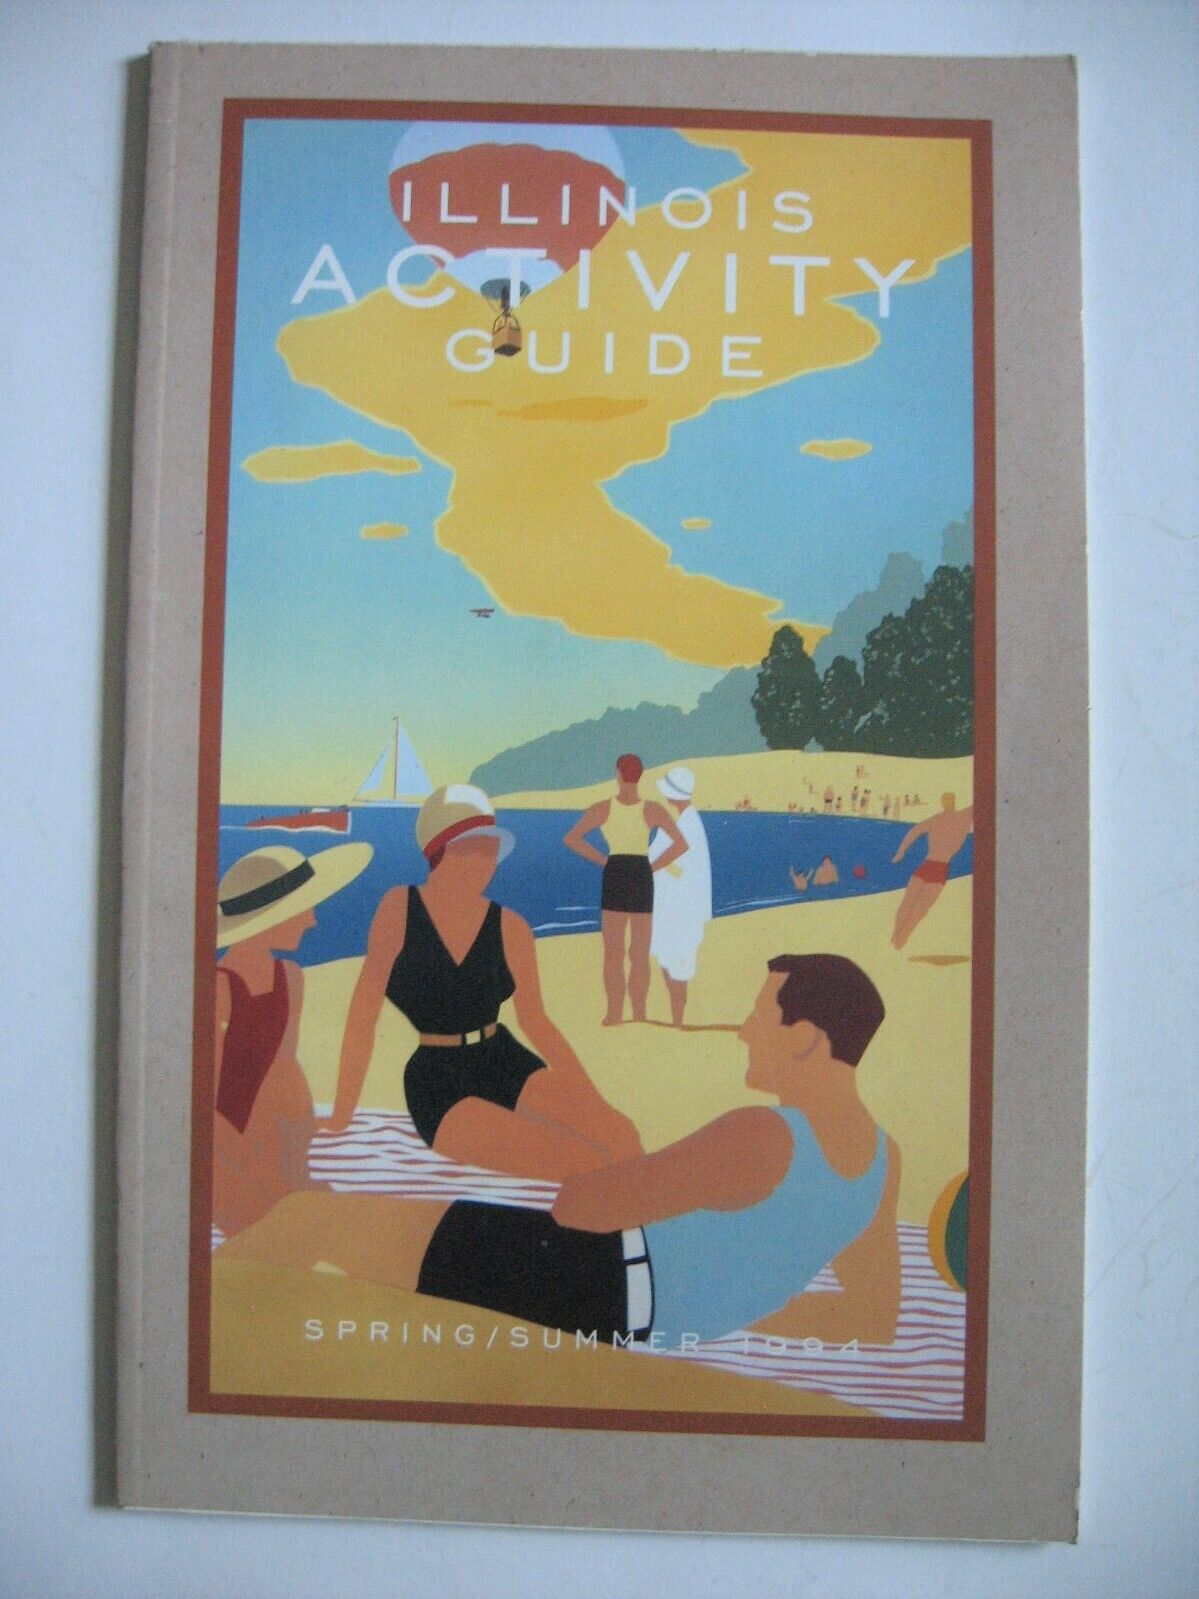 VTG 1994 Illinois Activity Guide Spring/ Summer 